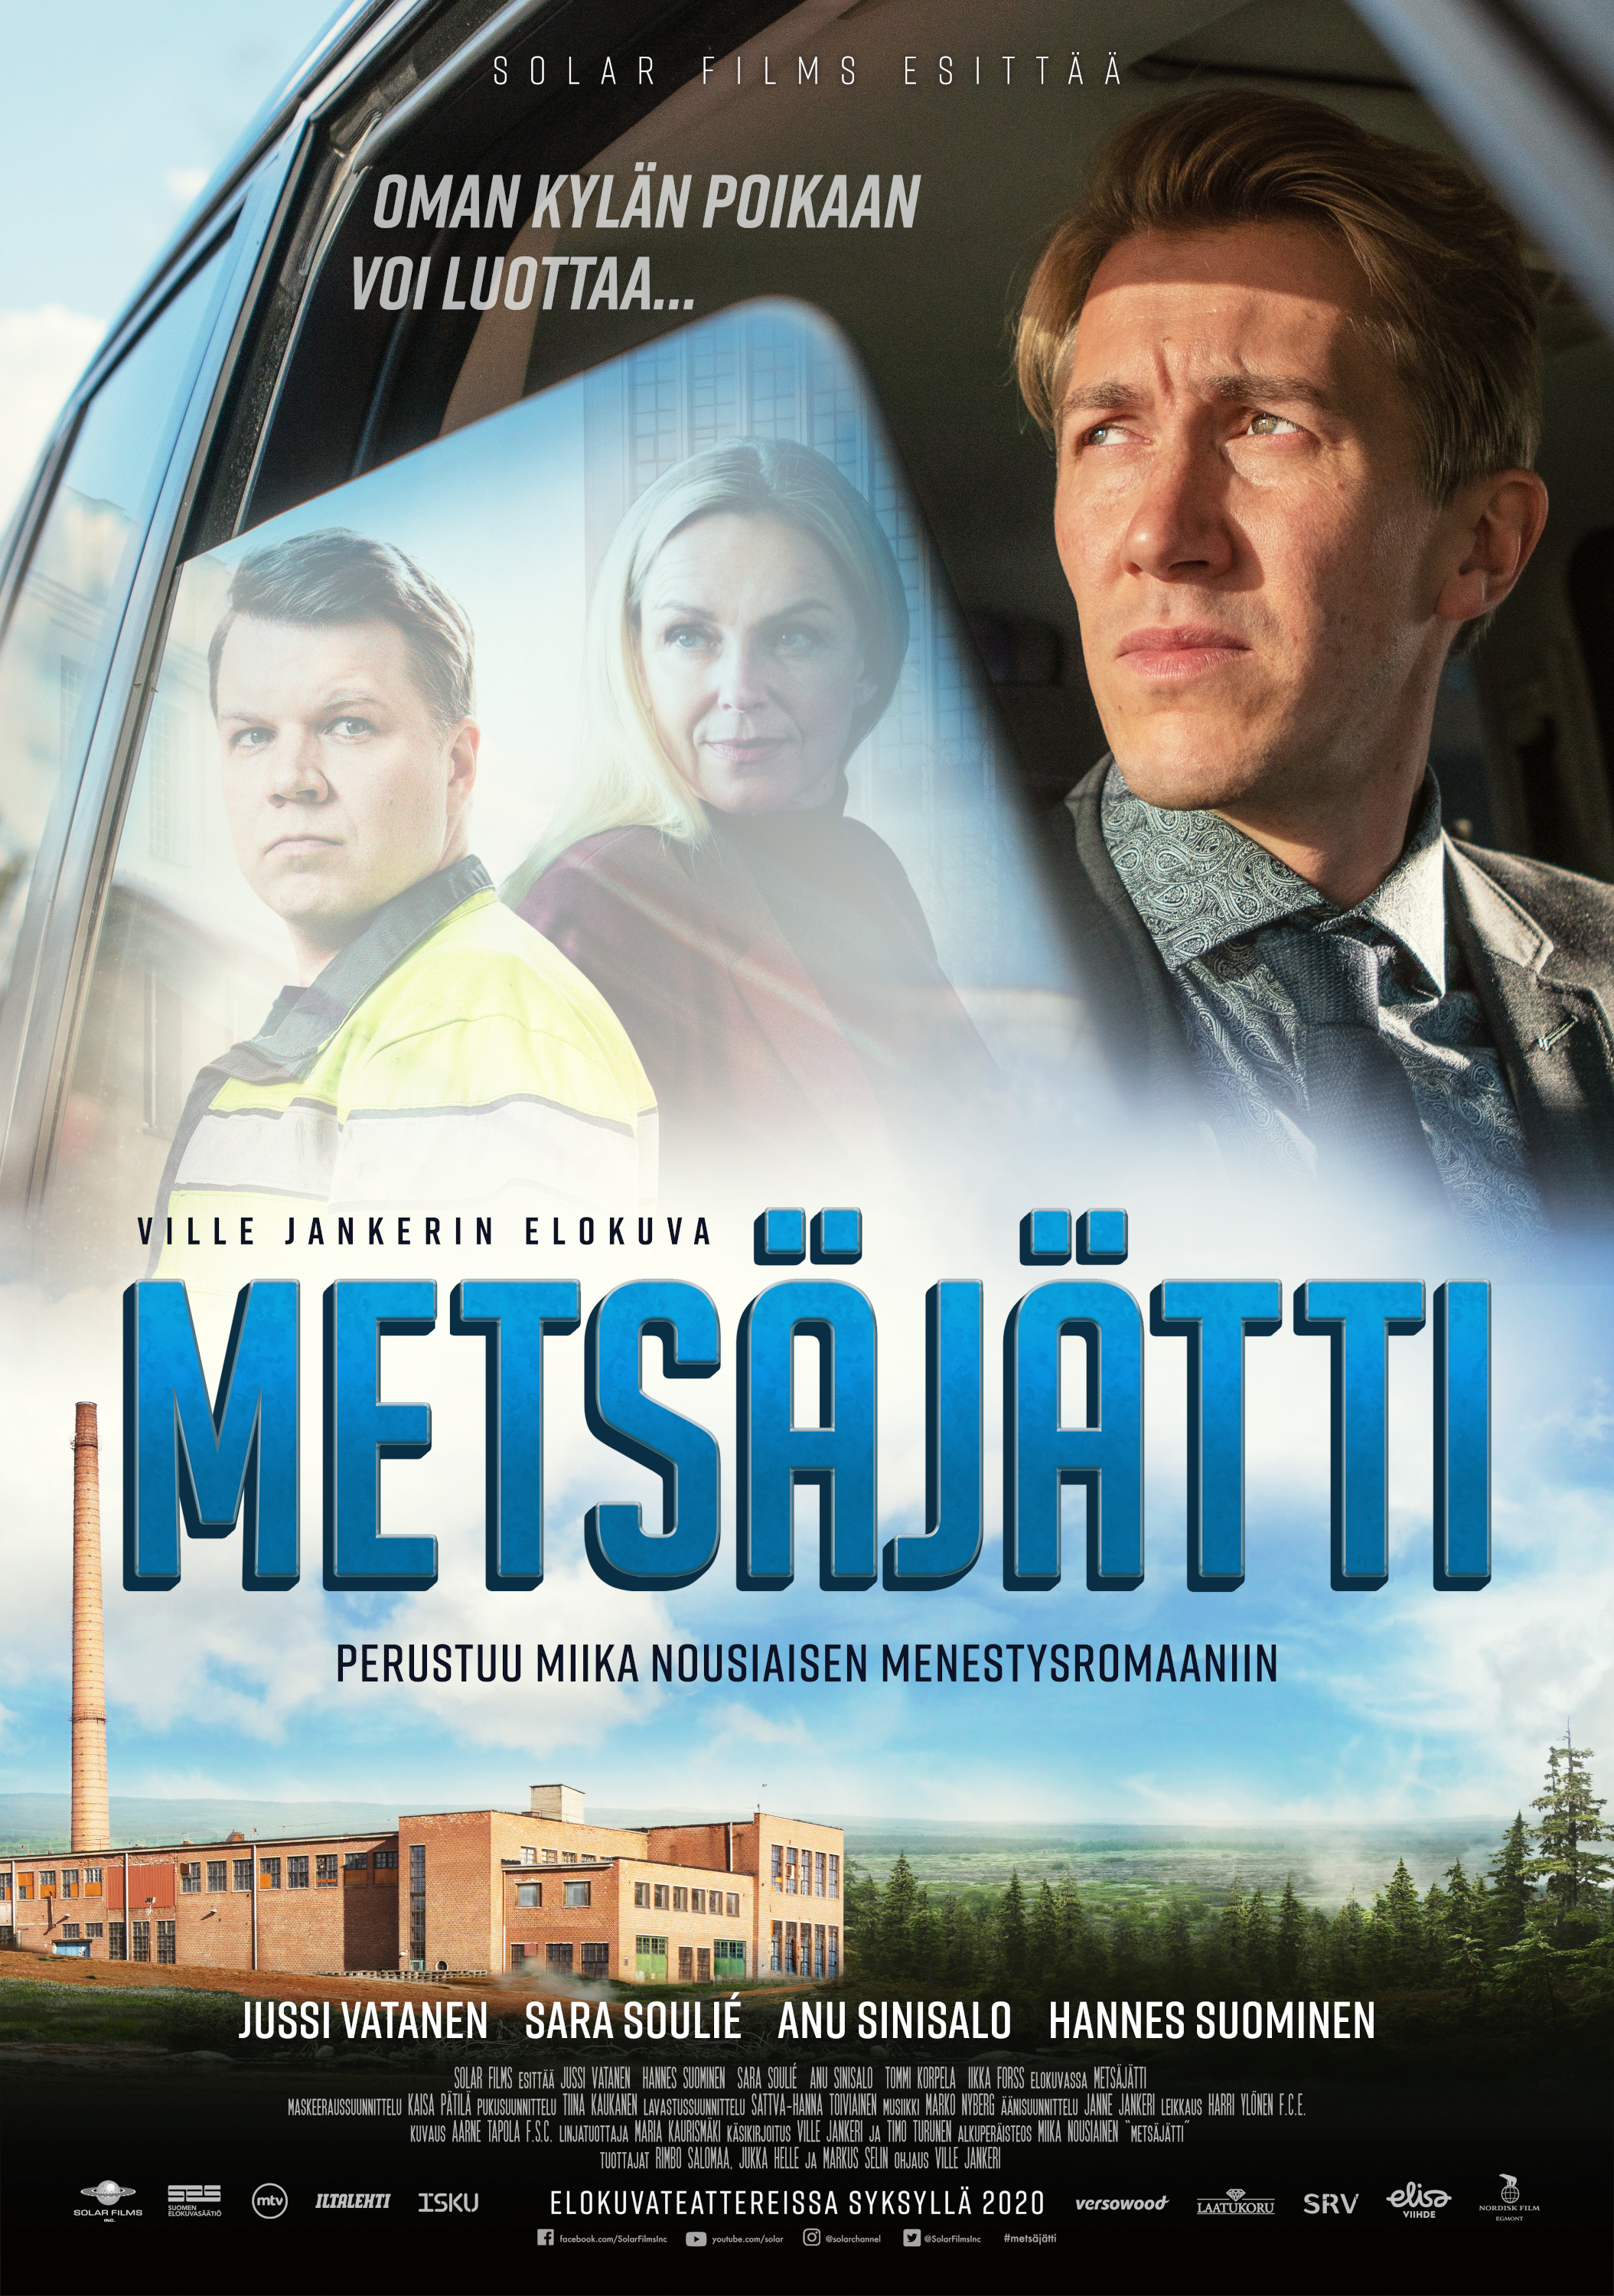 Mega Sized Movie Poster Image for Metsäjätti 